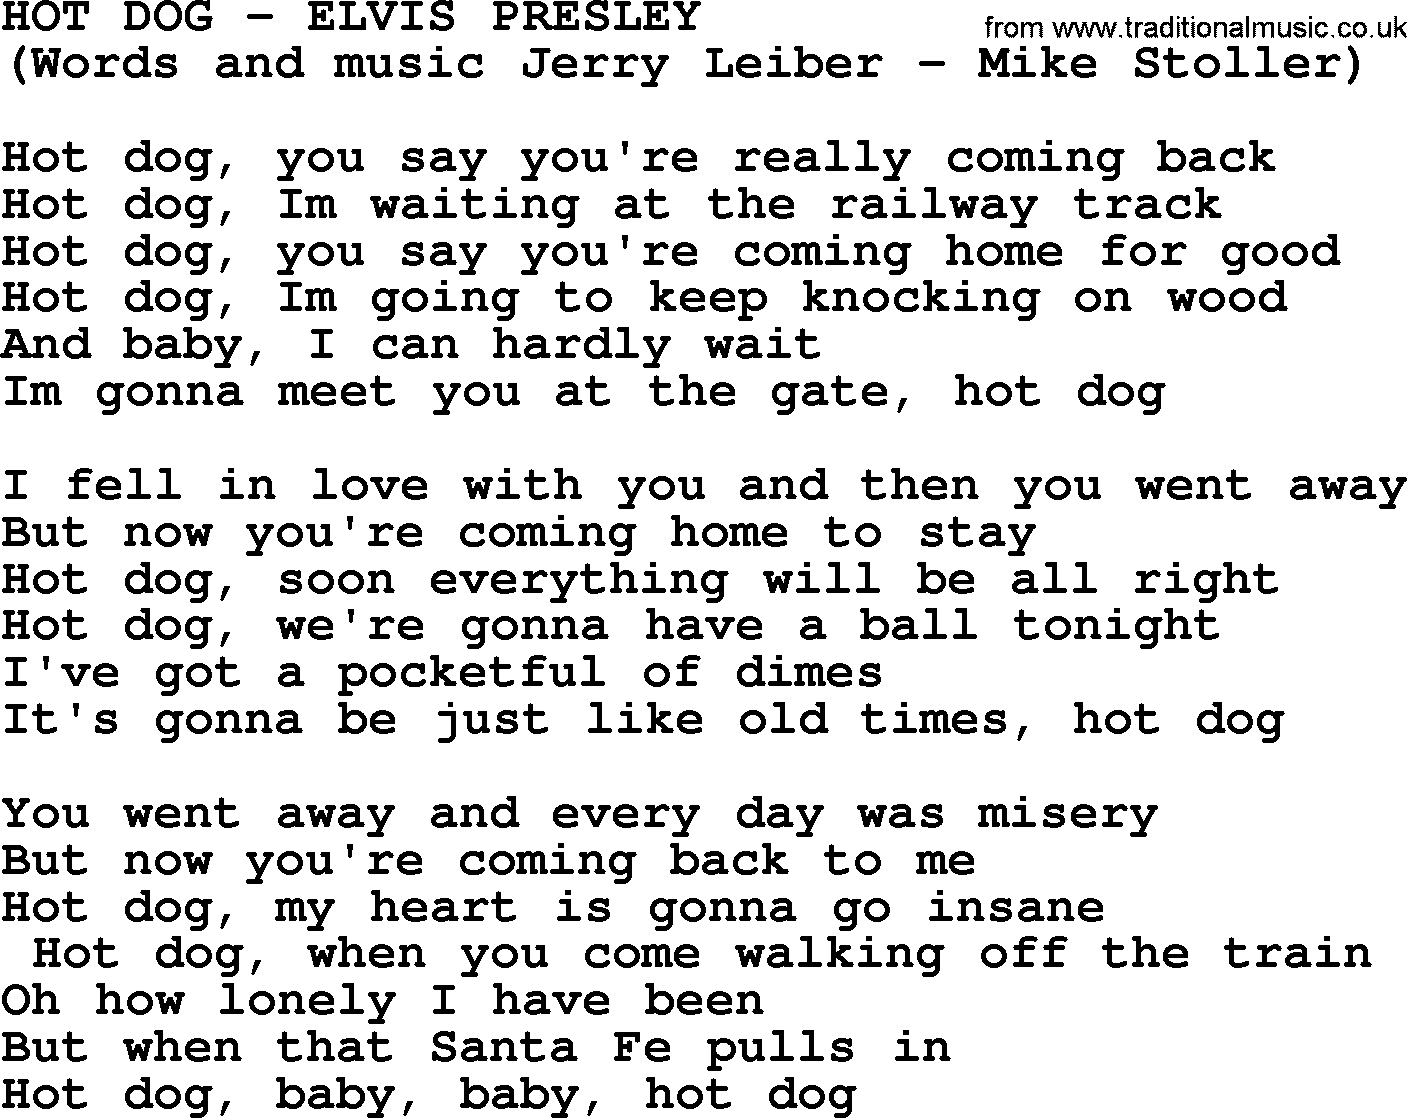 Elvis Presley song: Hot Dog lyrics